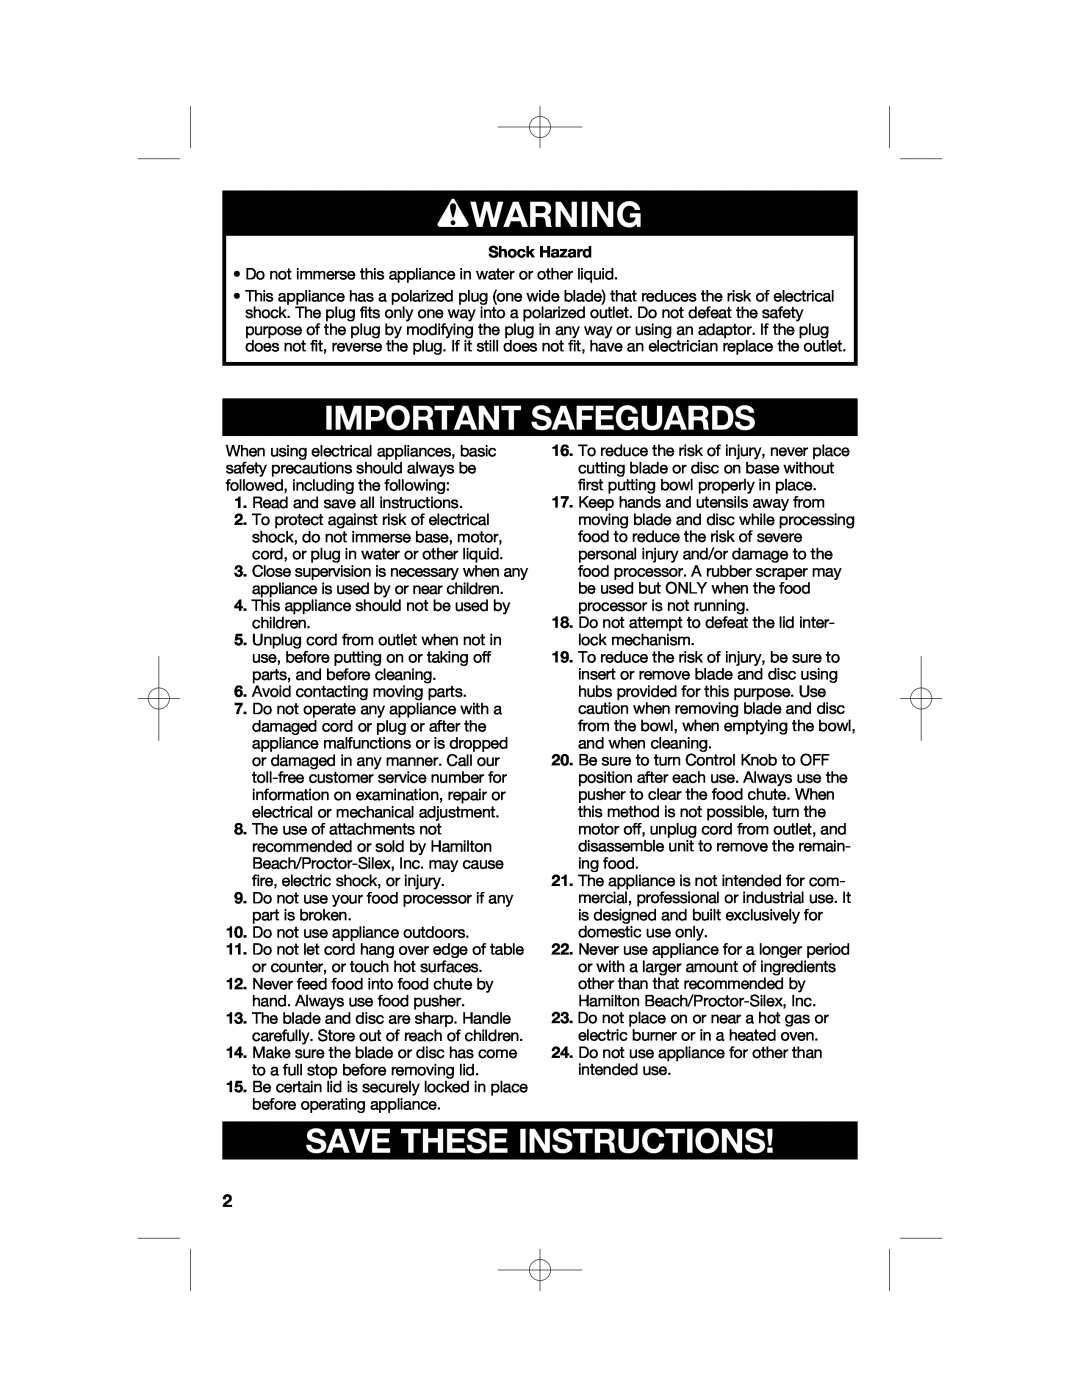 Hamilton Beach 70610, 70670 manual wWARNING, Important Safeguards, Save These Instructions, Shock Hazard 